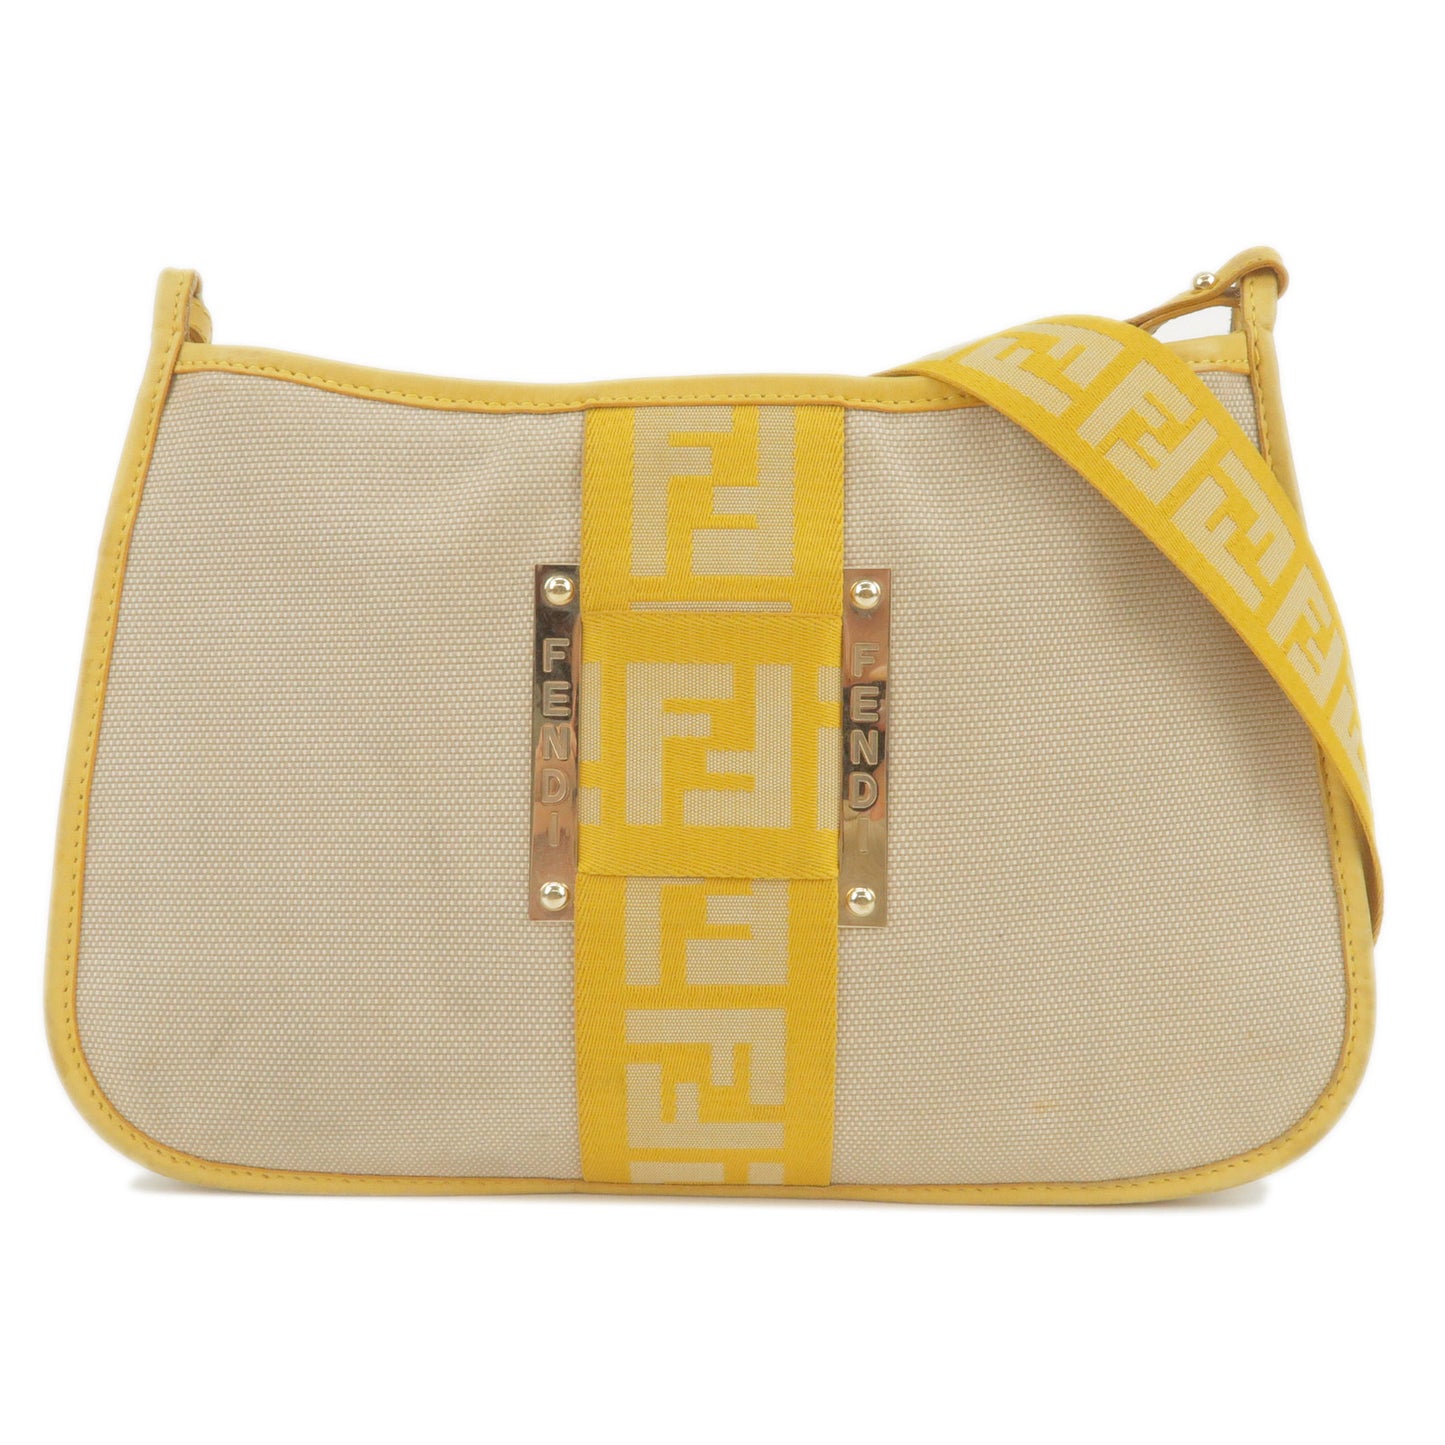 FENDI-Logo-Canvas-Leather-Shoulder-Bag-Beige-Yellow-8BT084